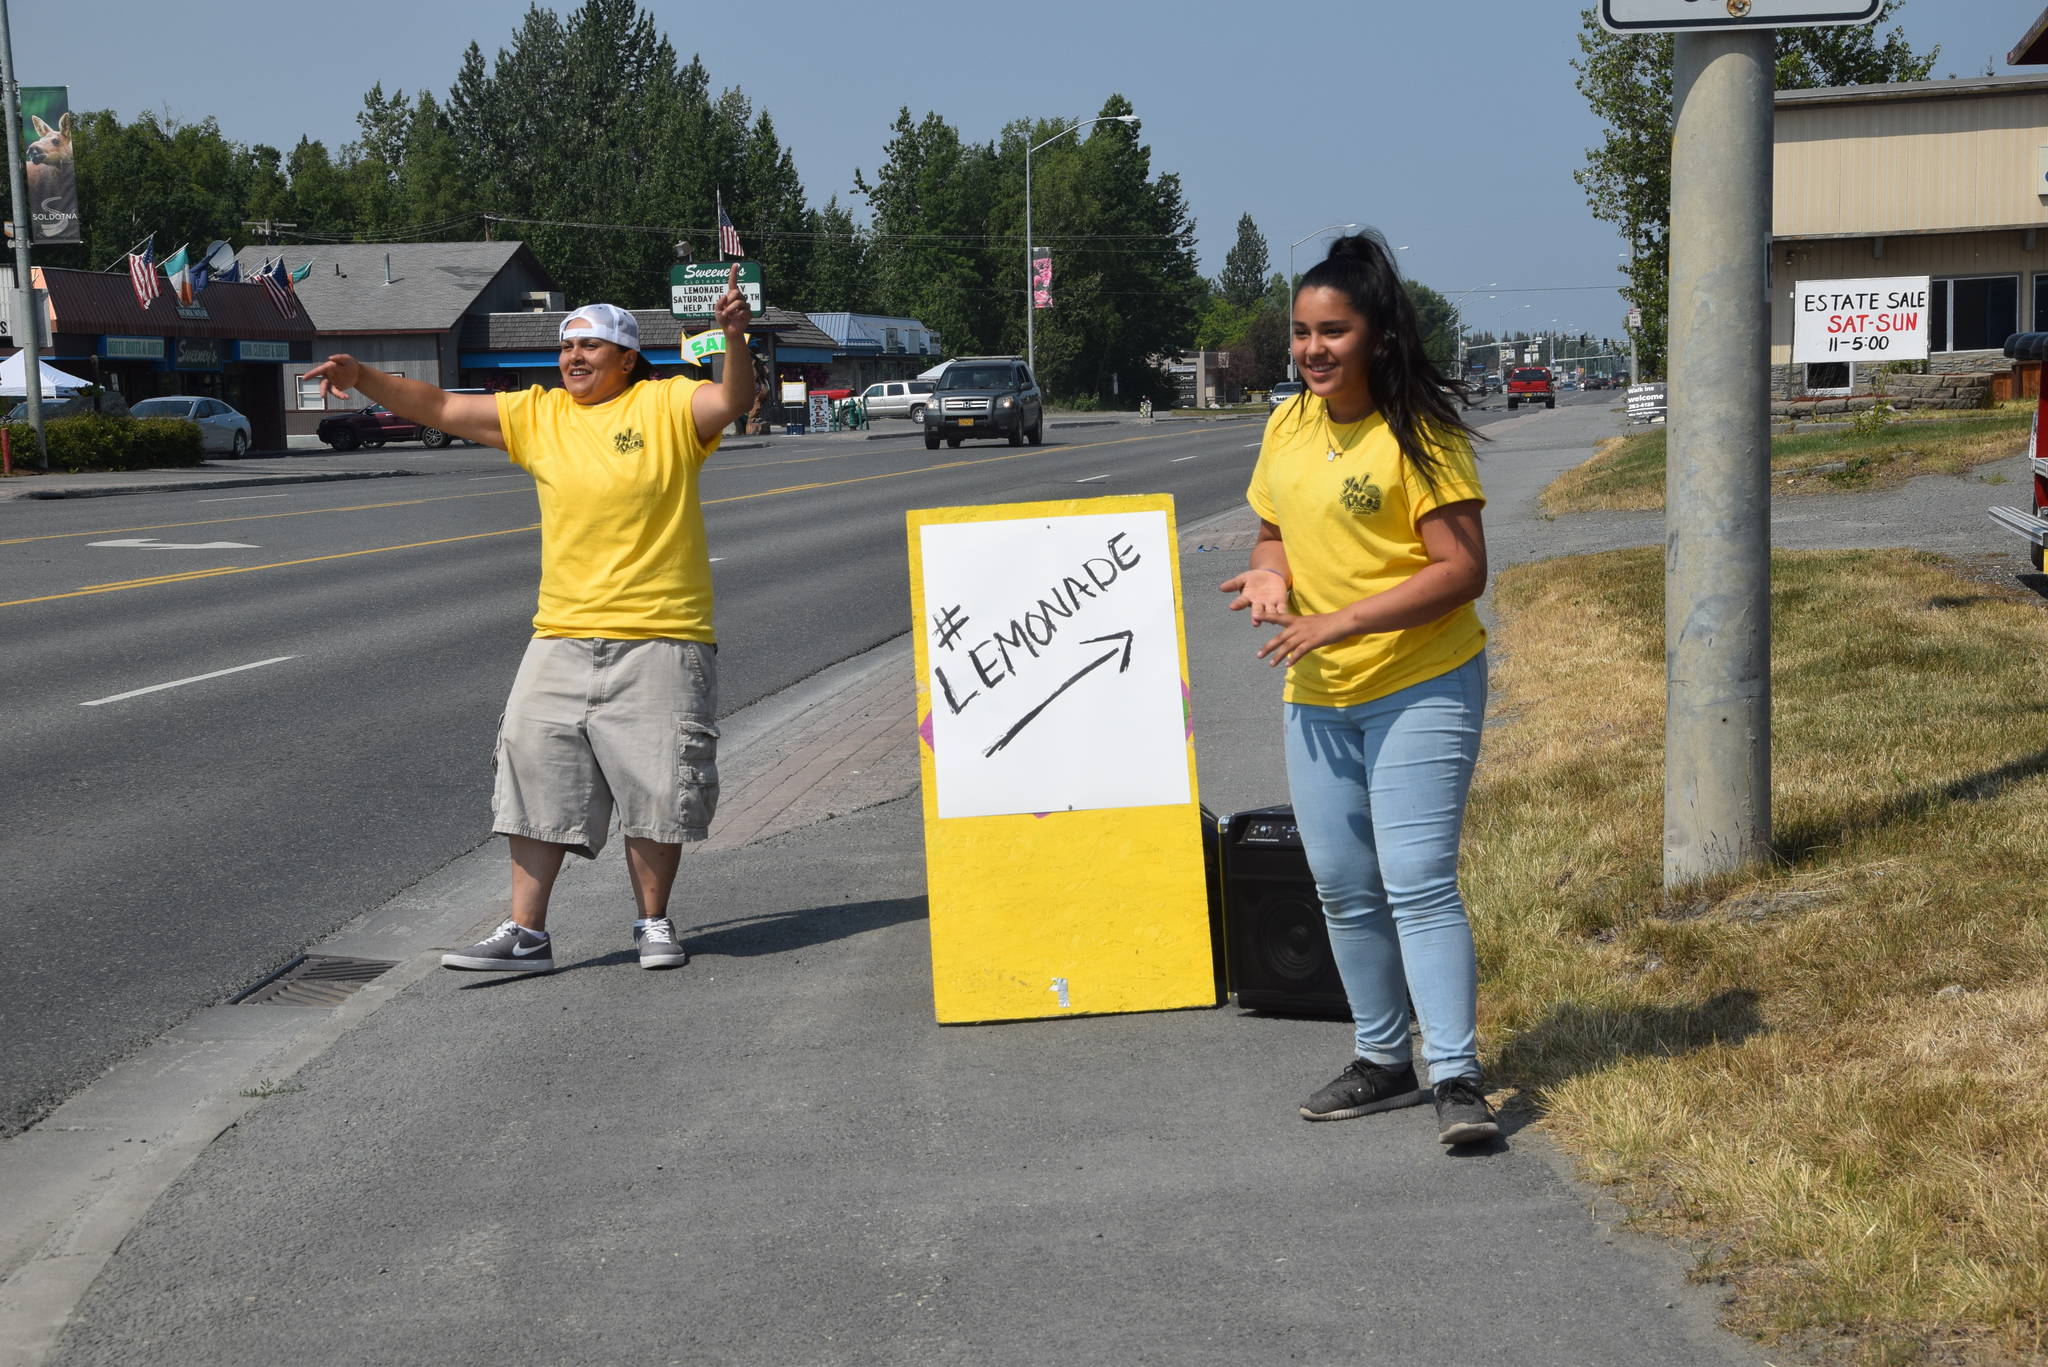 Nila Sanchez, left, and Alexa Menzel, right, advertise their lemonade business along the Kenai Spur Highway during Lemonade Day in Soldotna, Alaska on June 29, 2019. (Photo by Brian Mazurek/Peninsula Clarion)